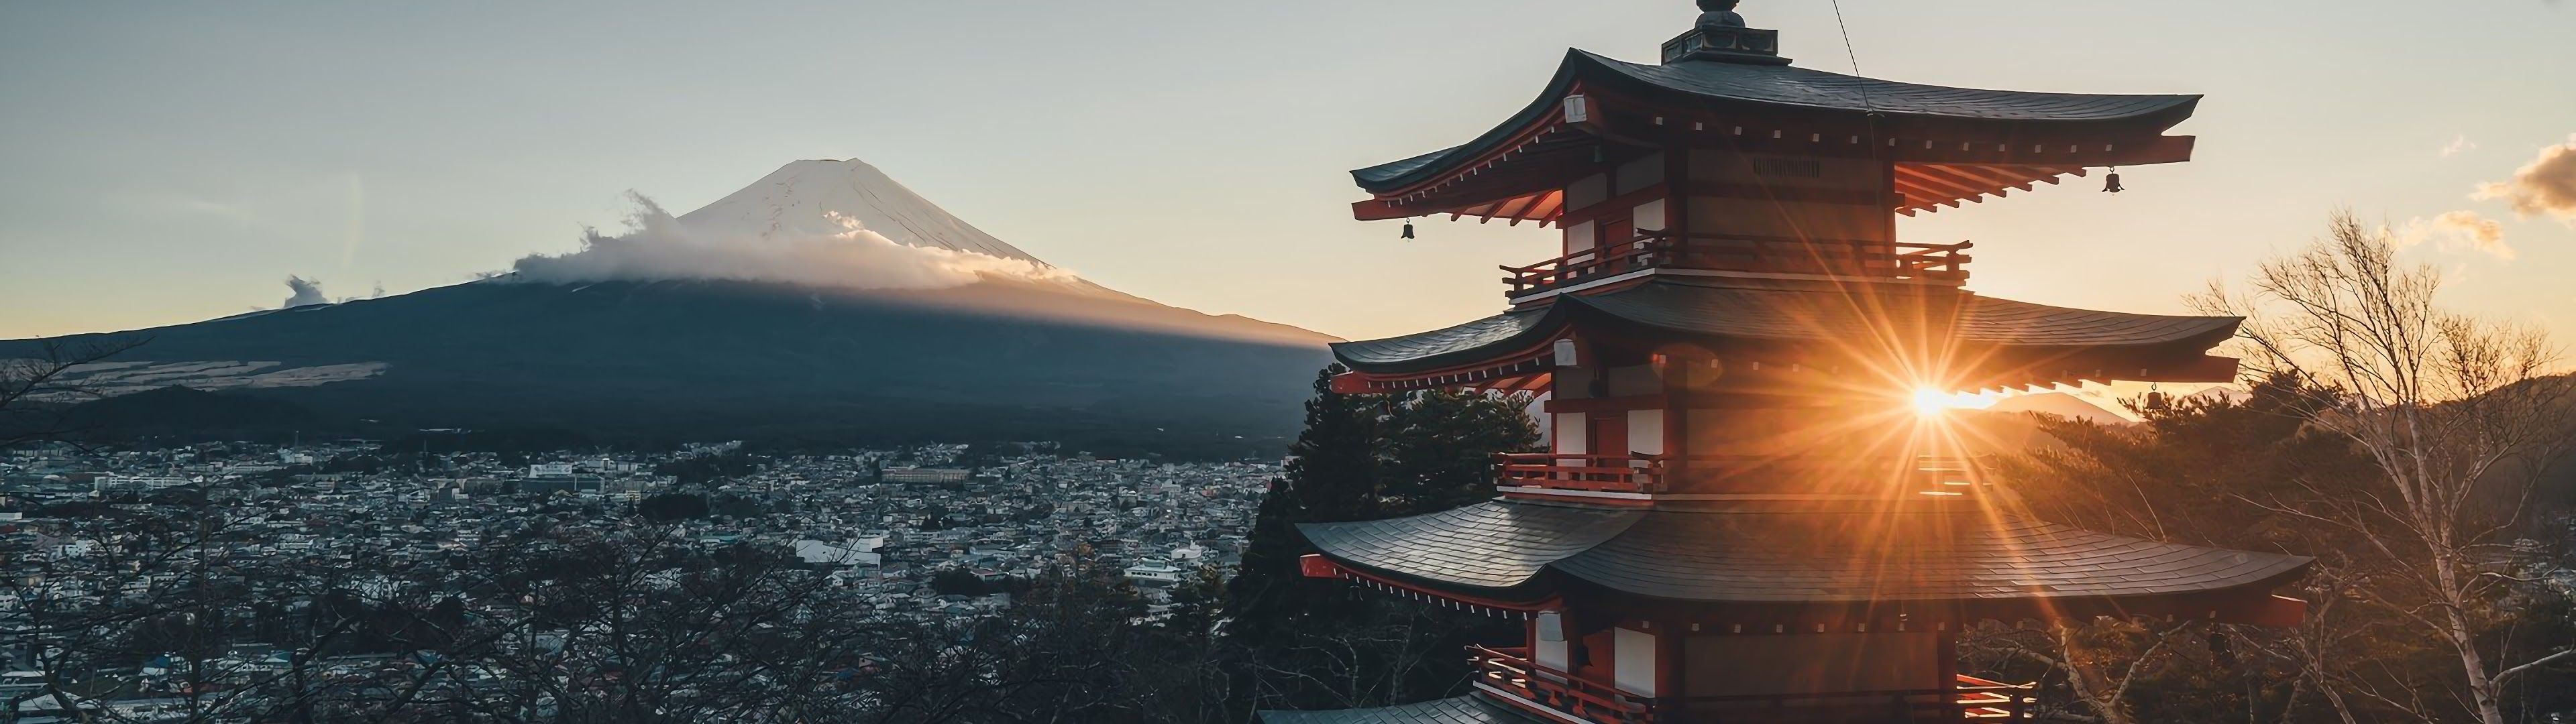 Mount Fuji, Travels, Japan Dual Monitor, Scenic, 3840x1080 Dual Screen Desktop